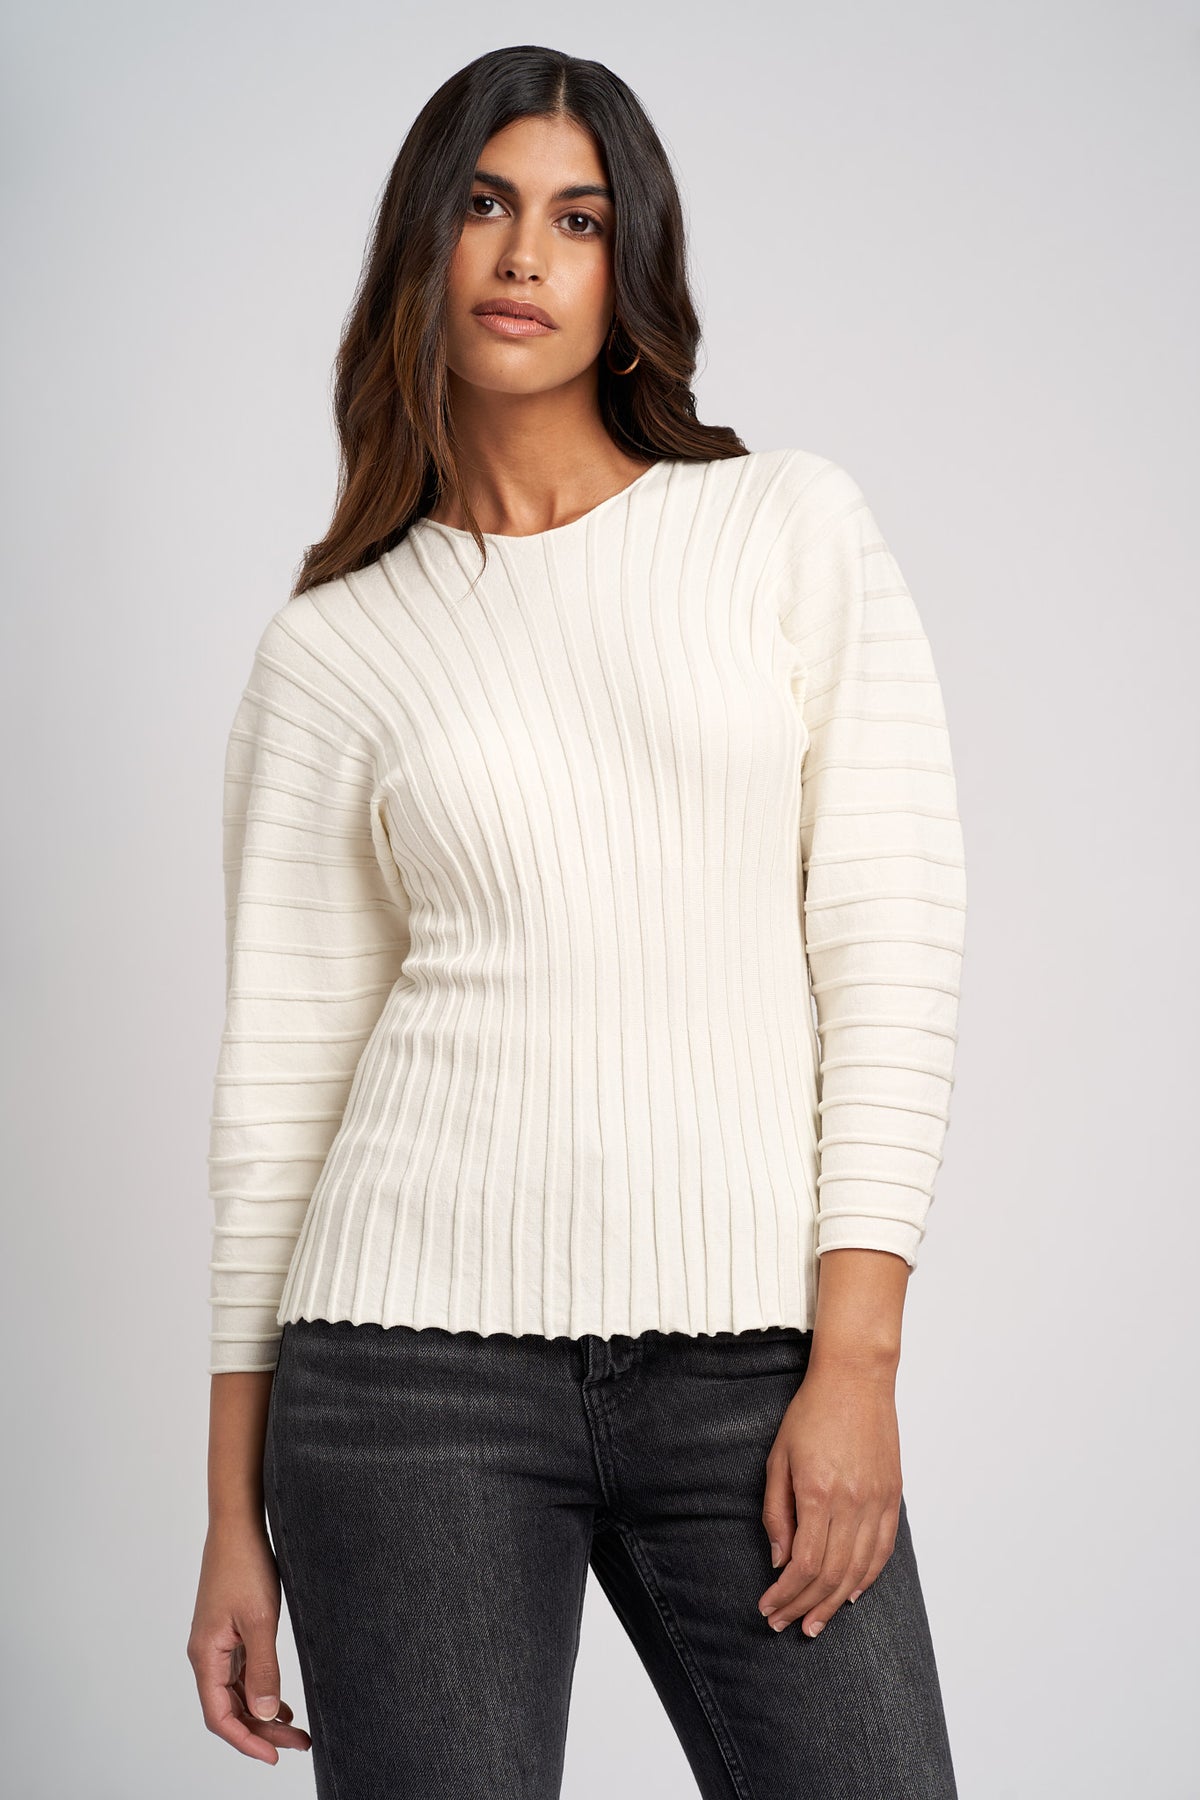 Verla Ivory Dolman Sleeve Sweater Top